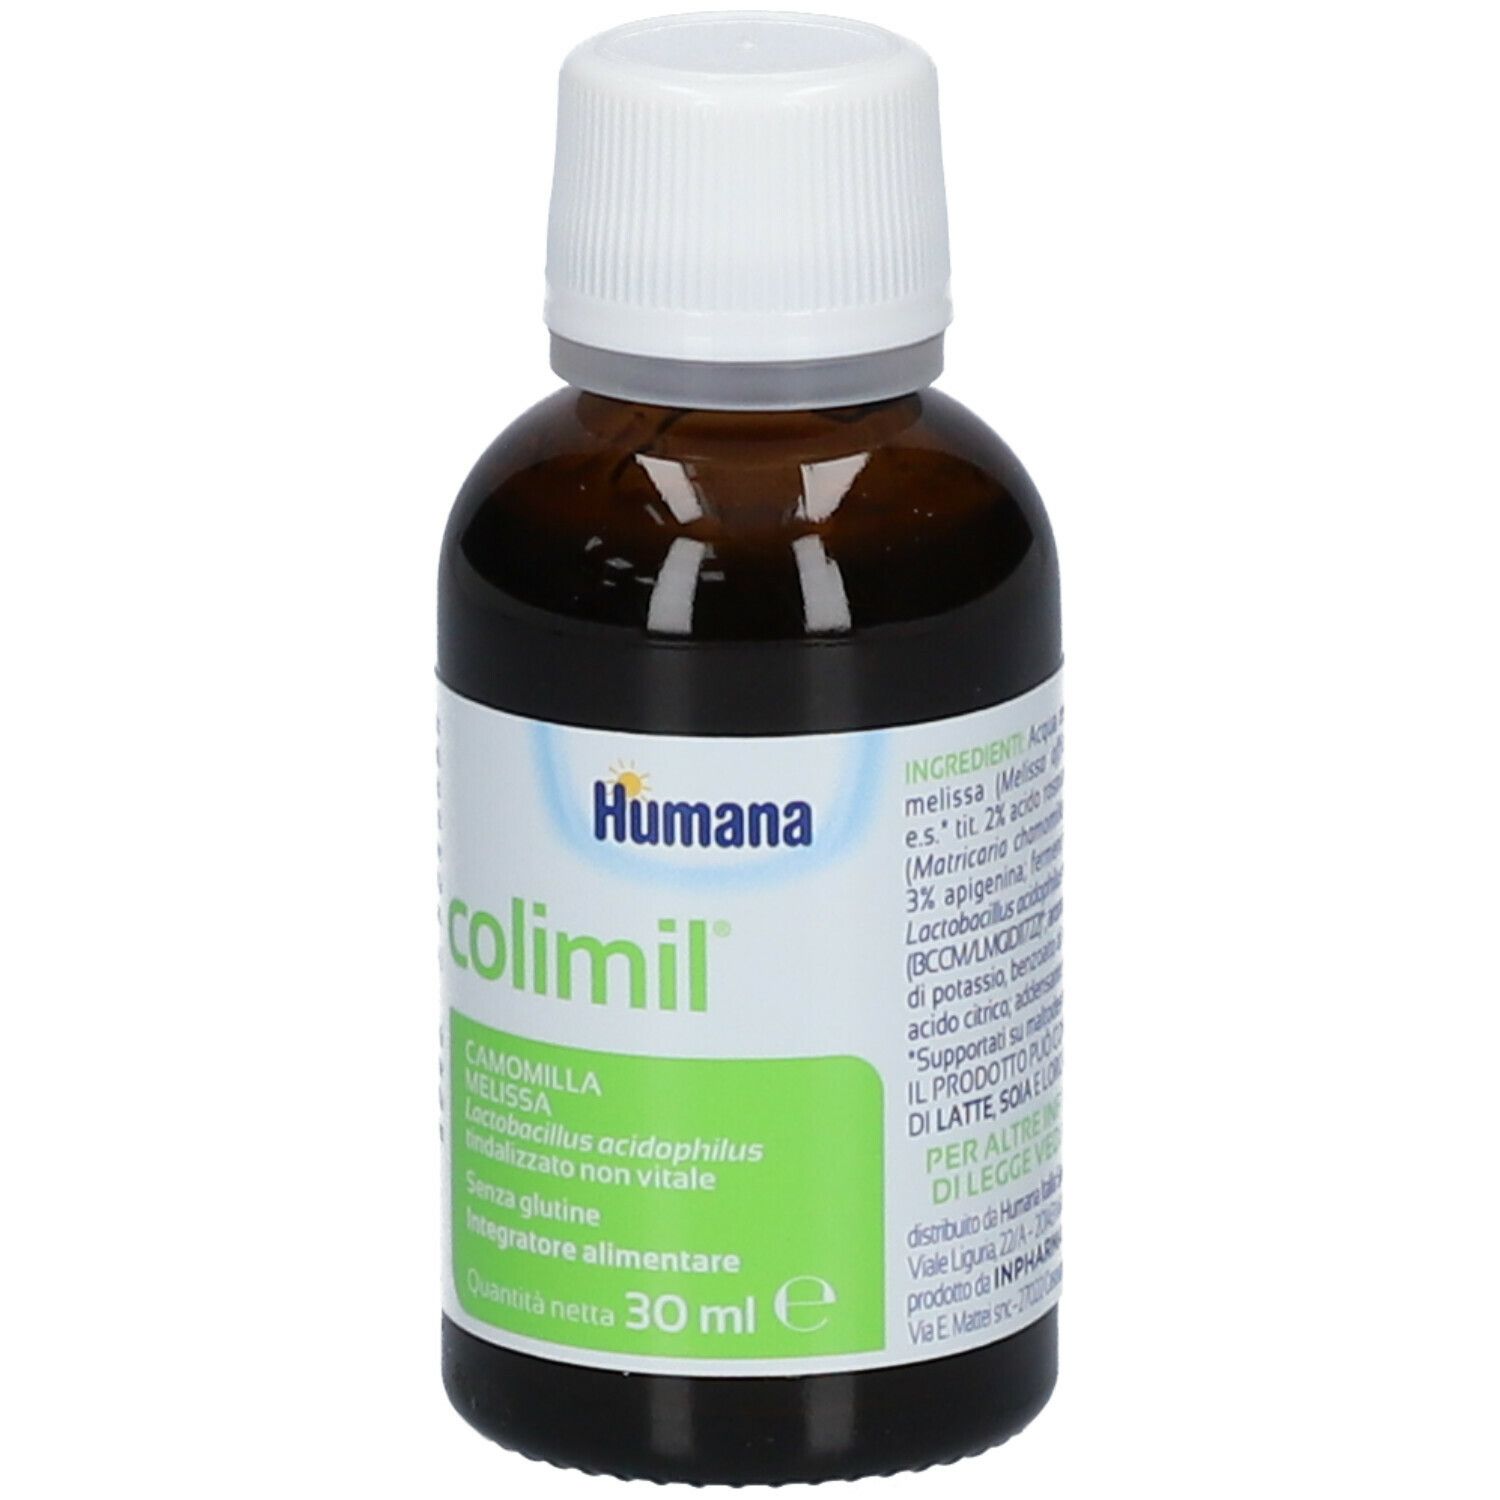 Humana Colimil®